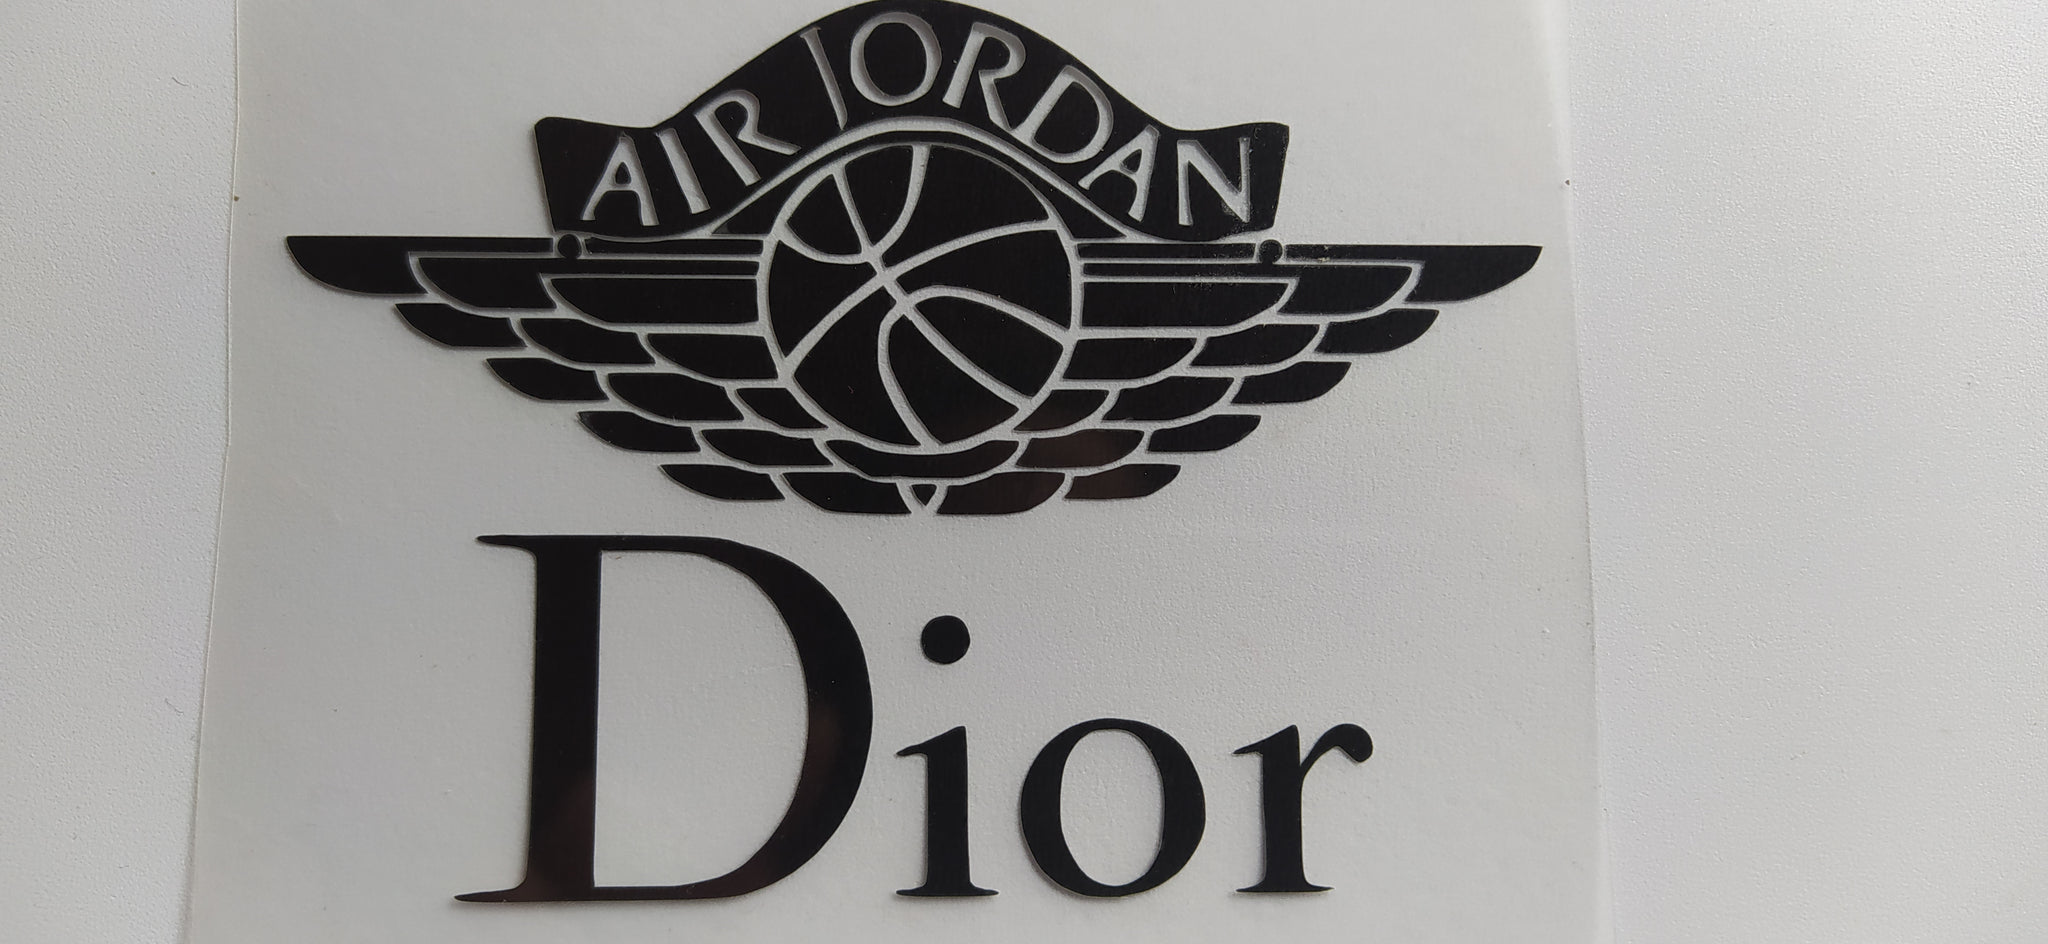 Air Jordan logo  Jordan logo wallpaper Jordan logo Air jordans